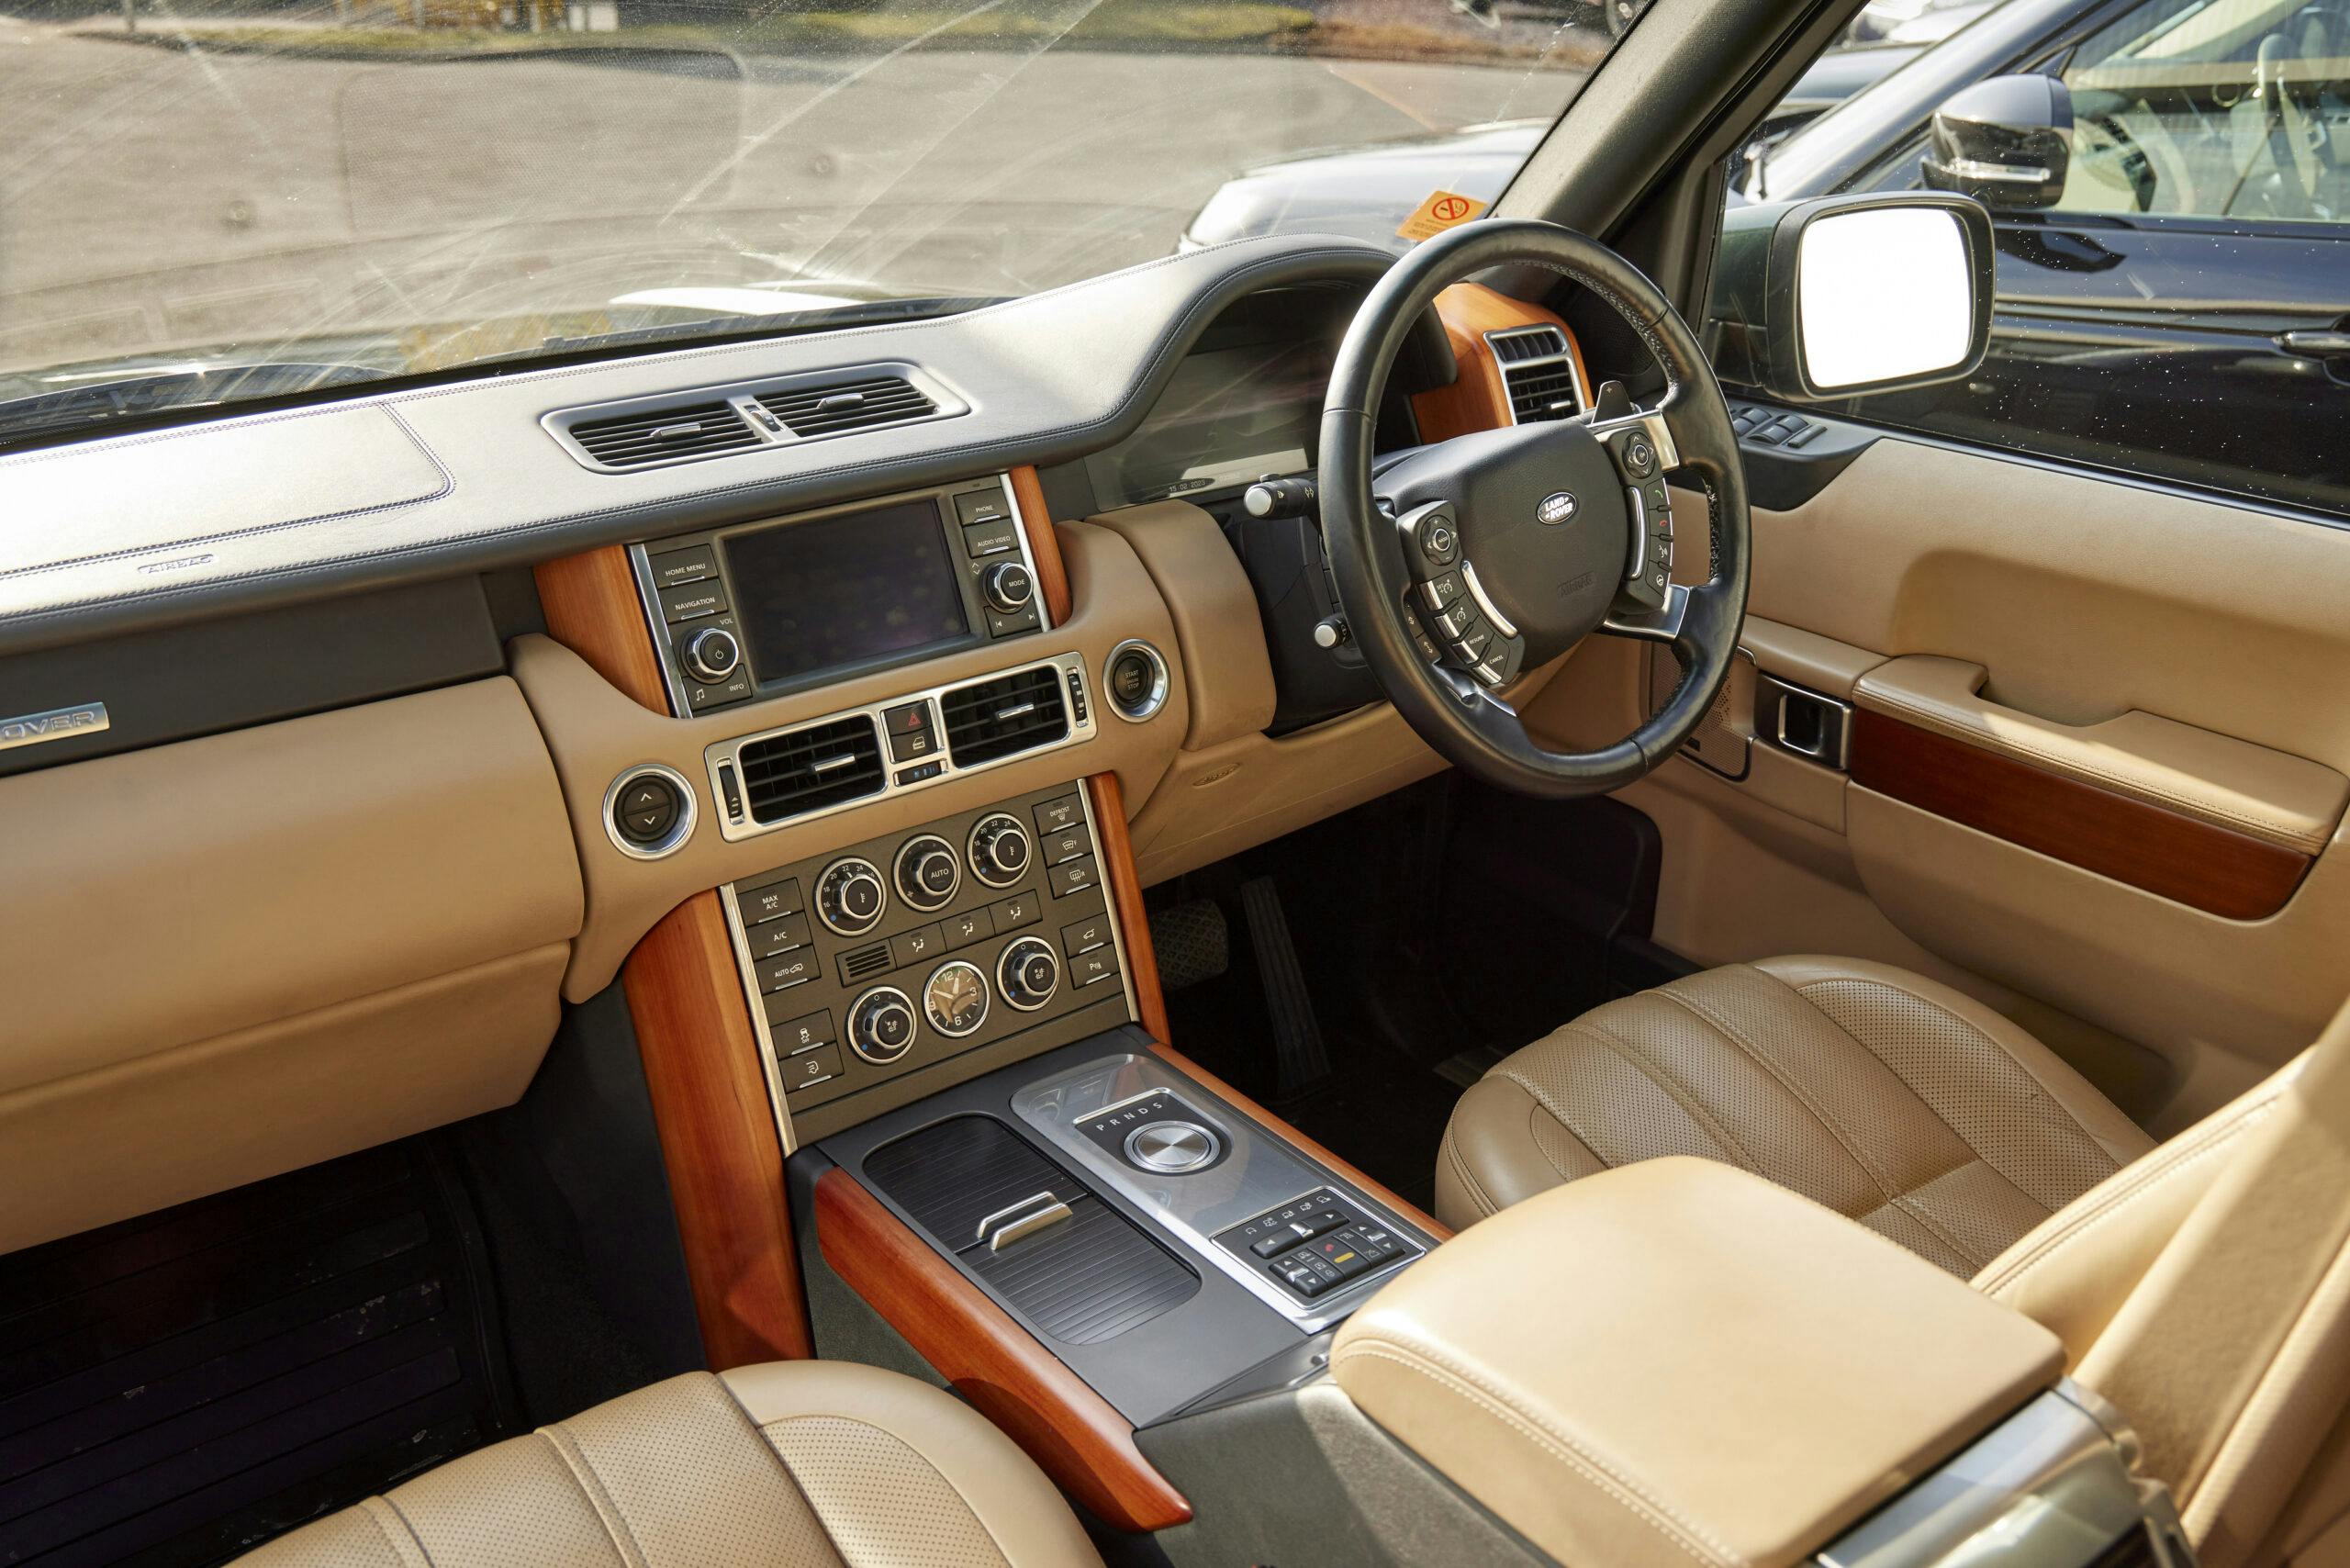 2010 Range Rover L322 interior